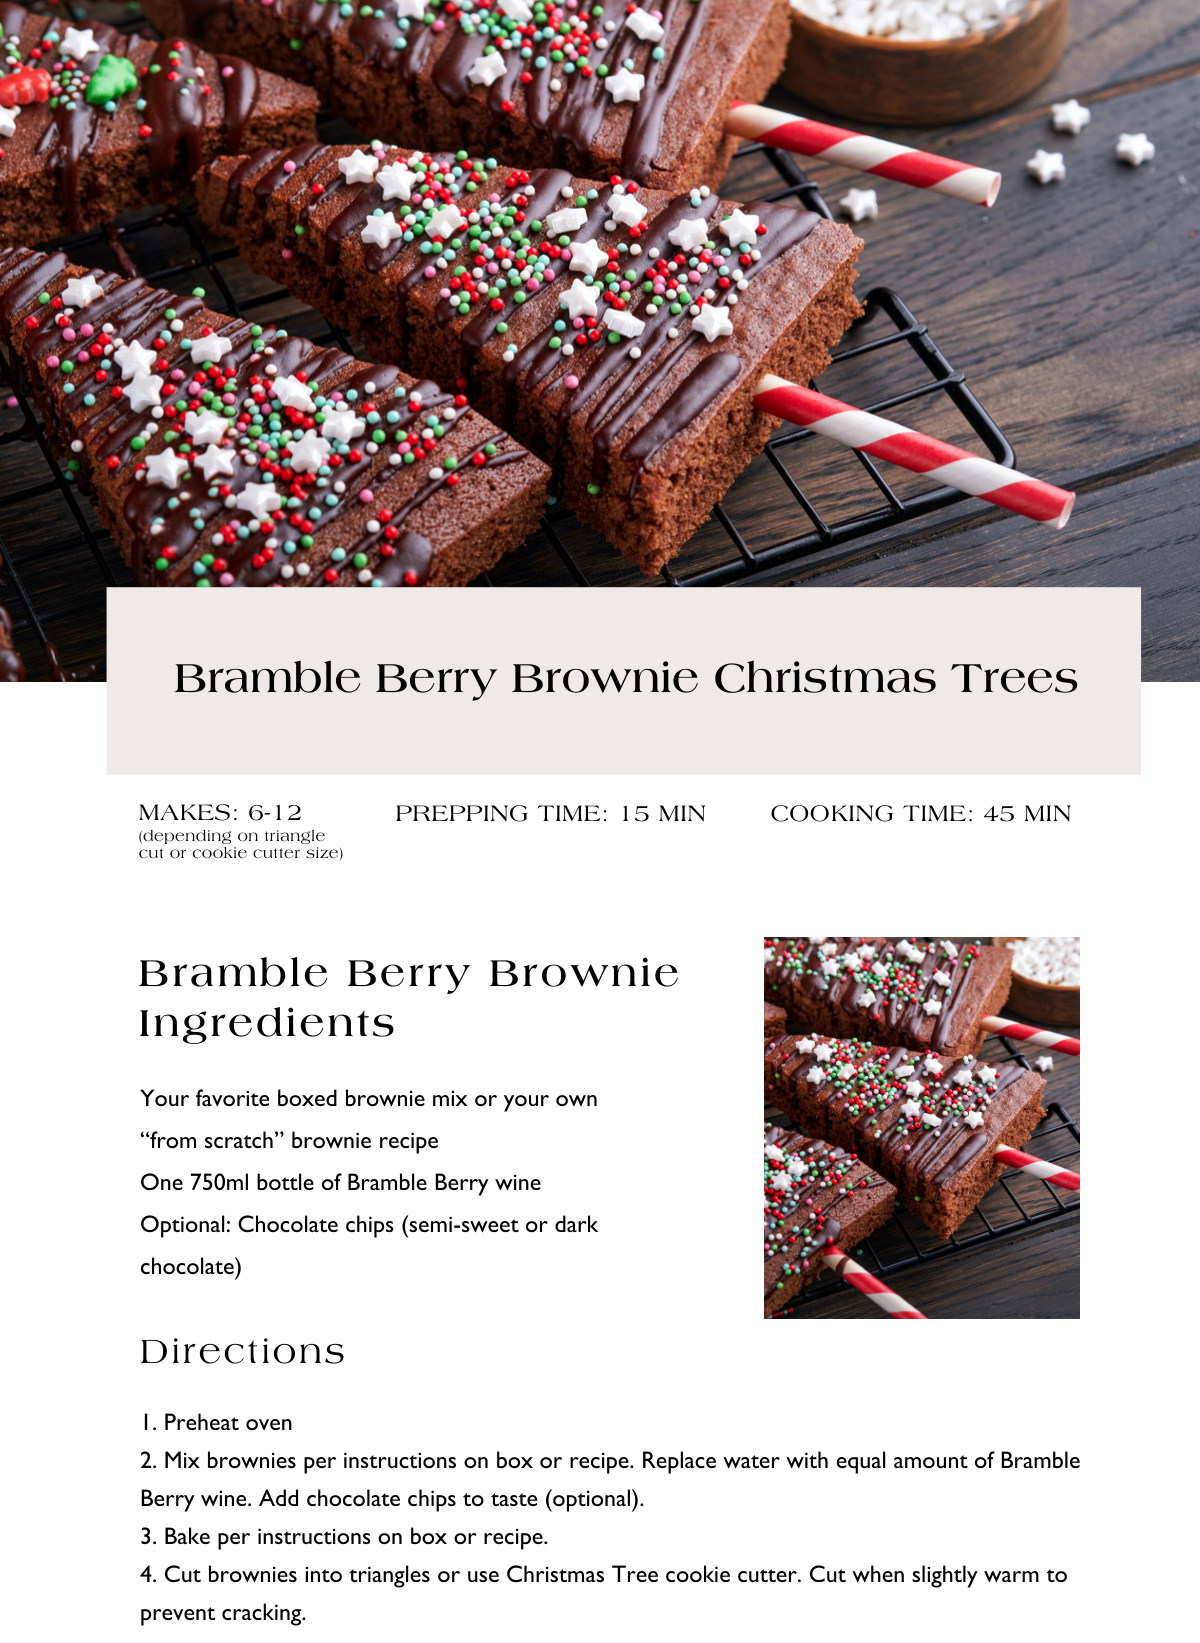 Bramble Berry Brownie Christmas Tree Recipe and ingredients.